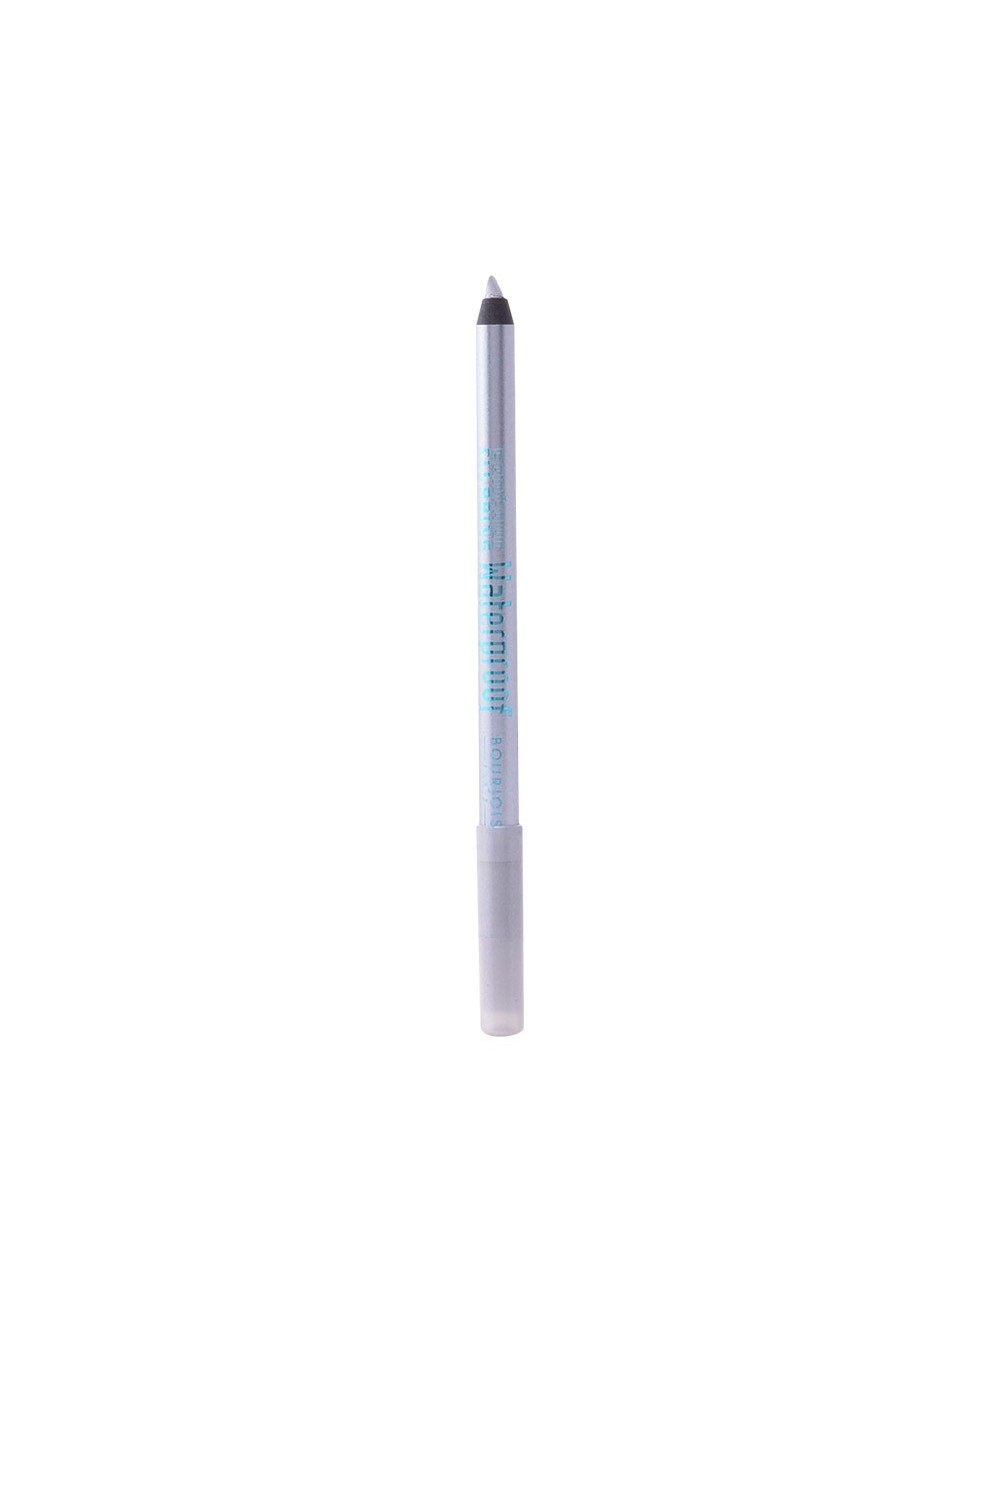 BOURJOIS - Contour Clubbing Waterproof Eye Pencil 52